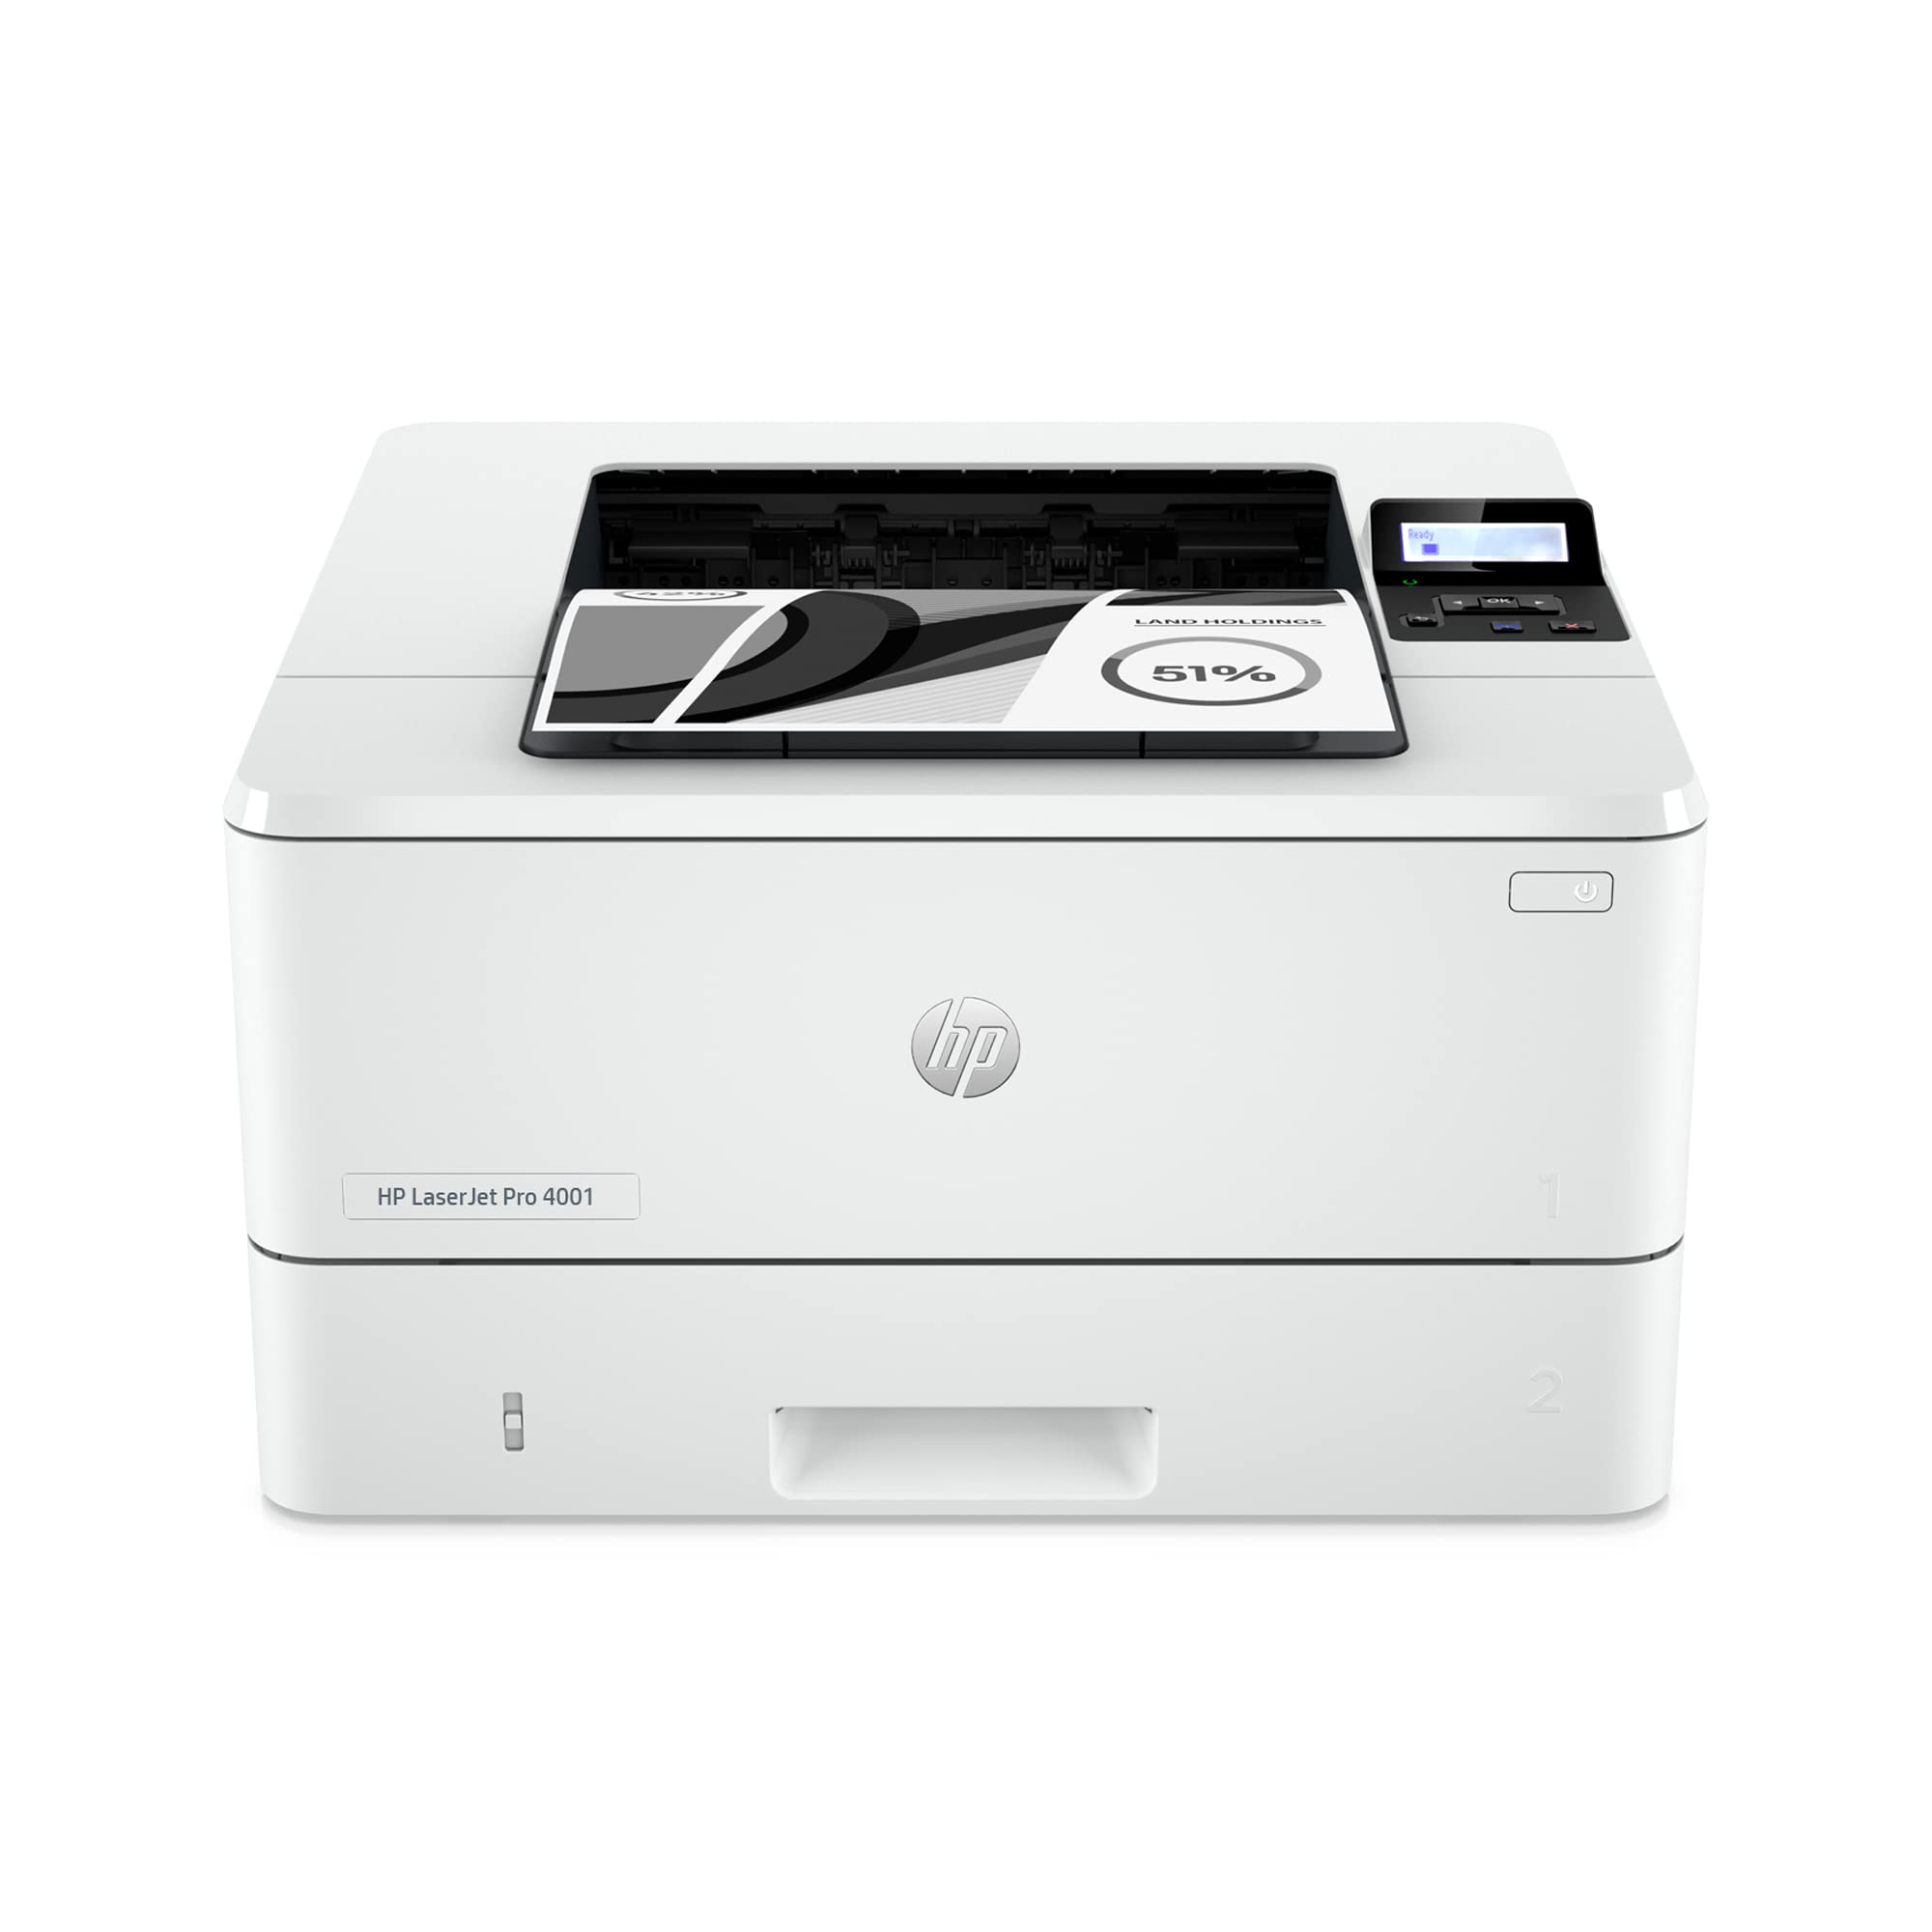 HP LaserJet Pro 4001dw impressora sem fio preto e branco